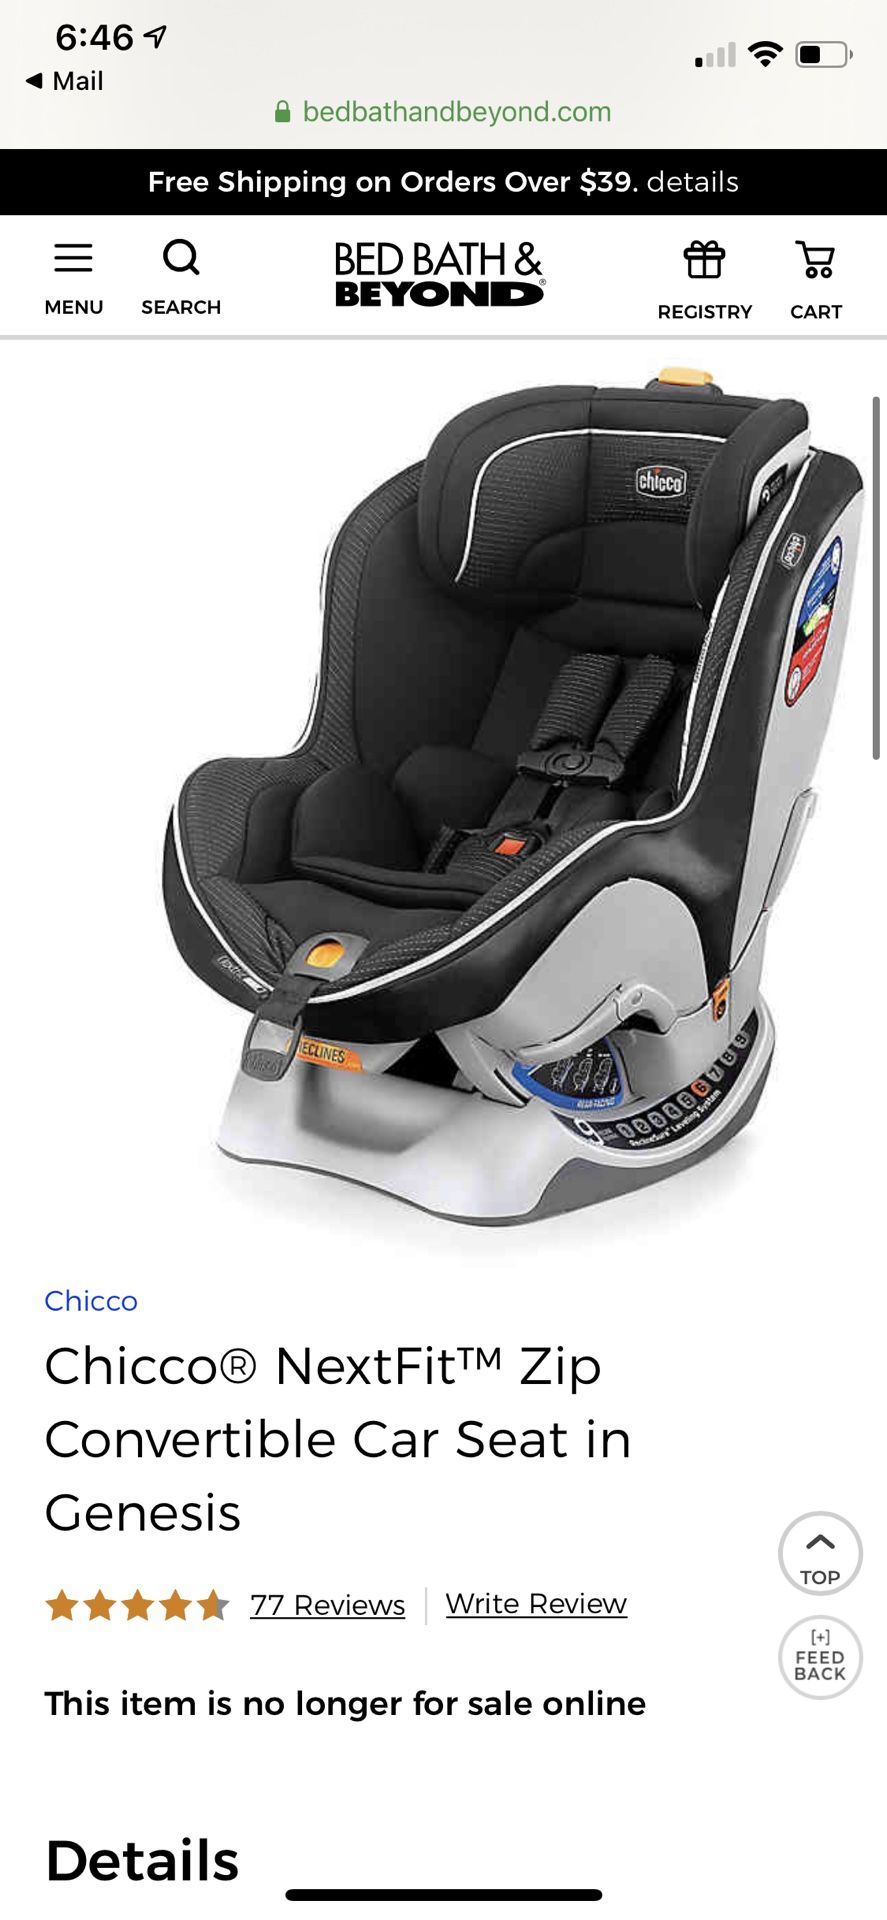 Chicco NextFit ZIP Convertible Car seat